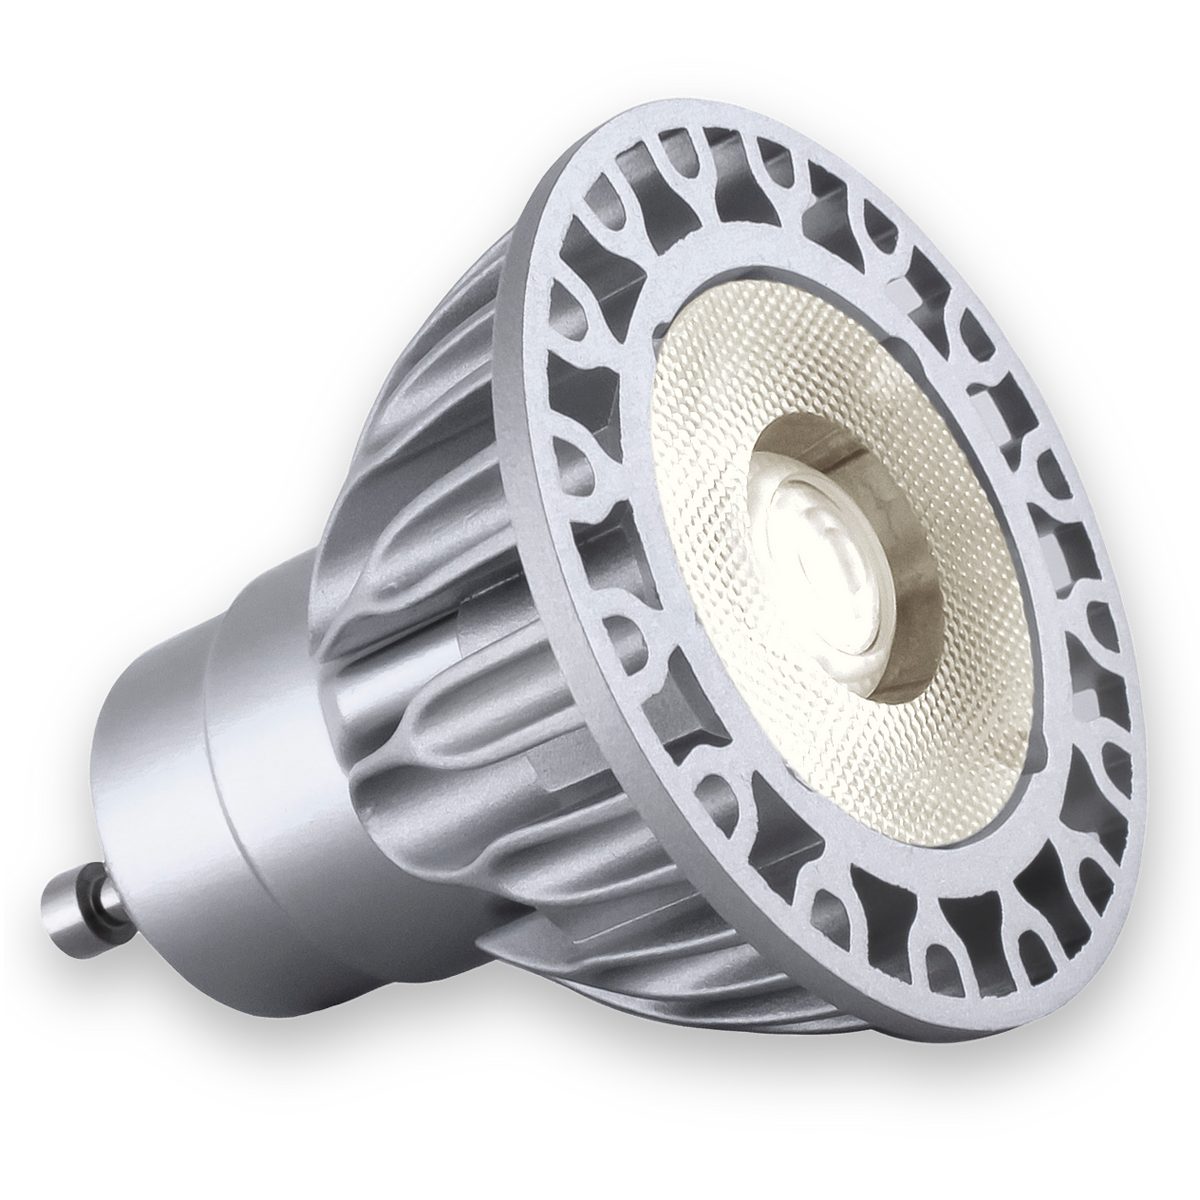 Vollspektrum 3 GU10, LED-Leuchtmittel wie Soraa - R9 LED mit GU10 dimmbar Vivid Soraa 60°, - Warmton Vollspektrum Glühlampe, MR16 95 7.5Watt, LED - - CRI